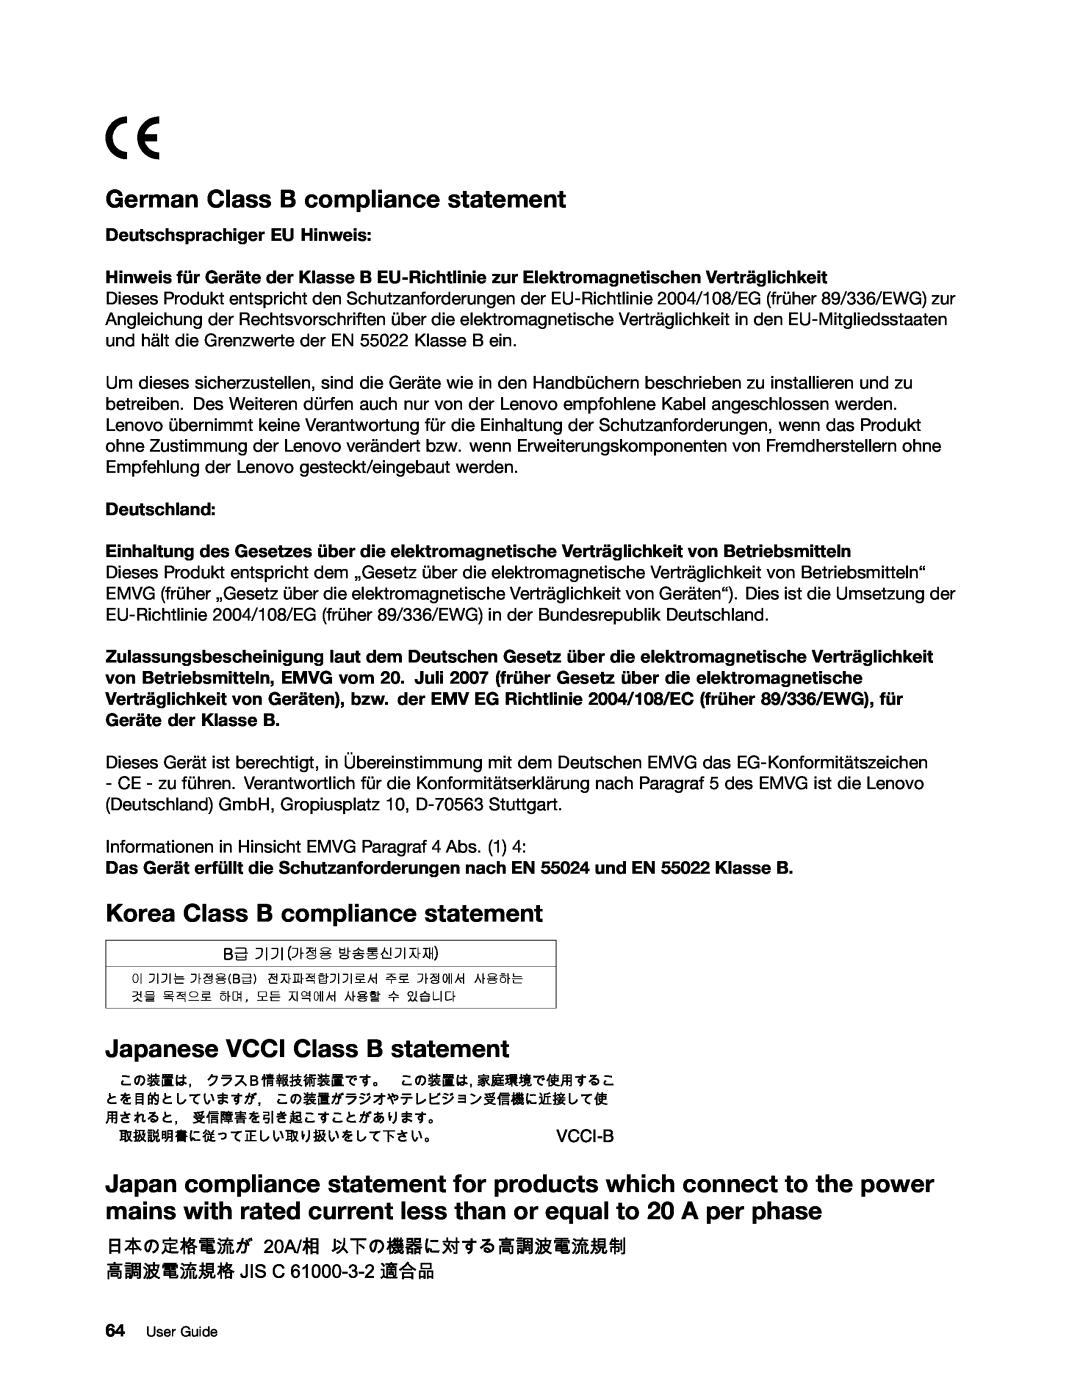 Lenovo 36984LU German Class B compliance statement, Korea Class B compliance statement, Japanese VCCI Class B statement 